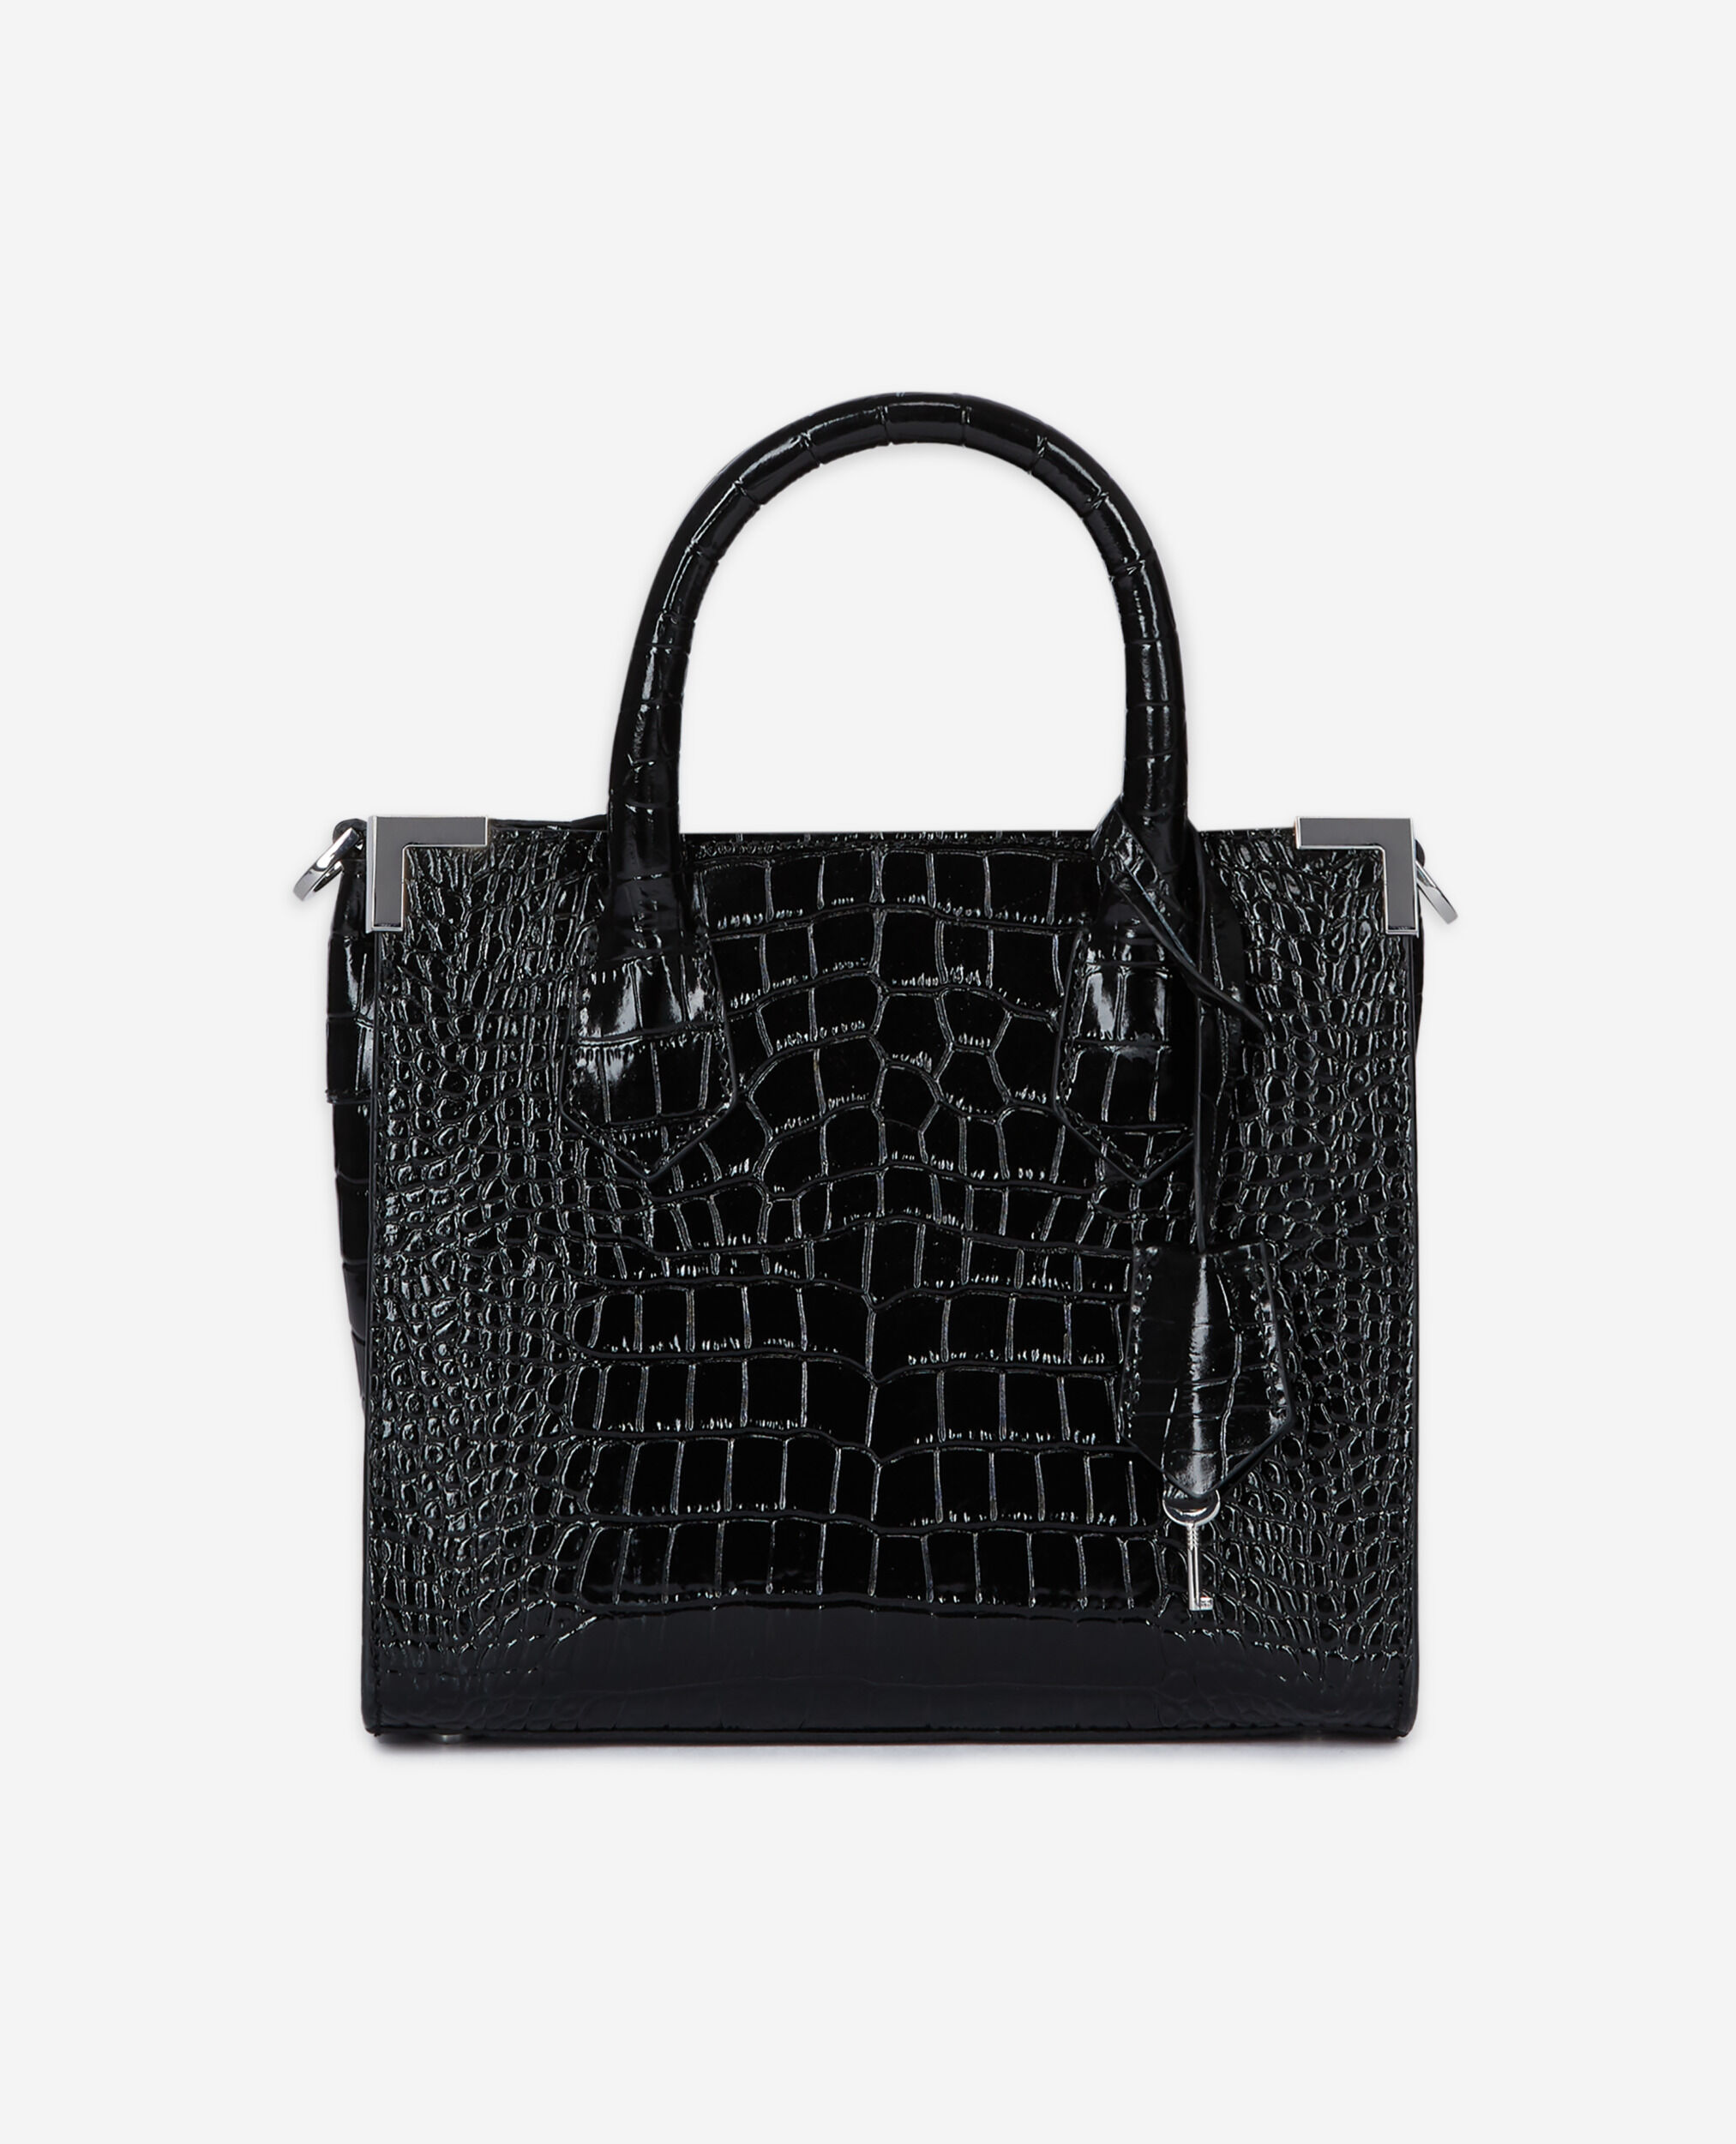 Medium Ming bag in black leather, BLACK, hi-res image number null